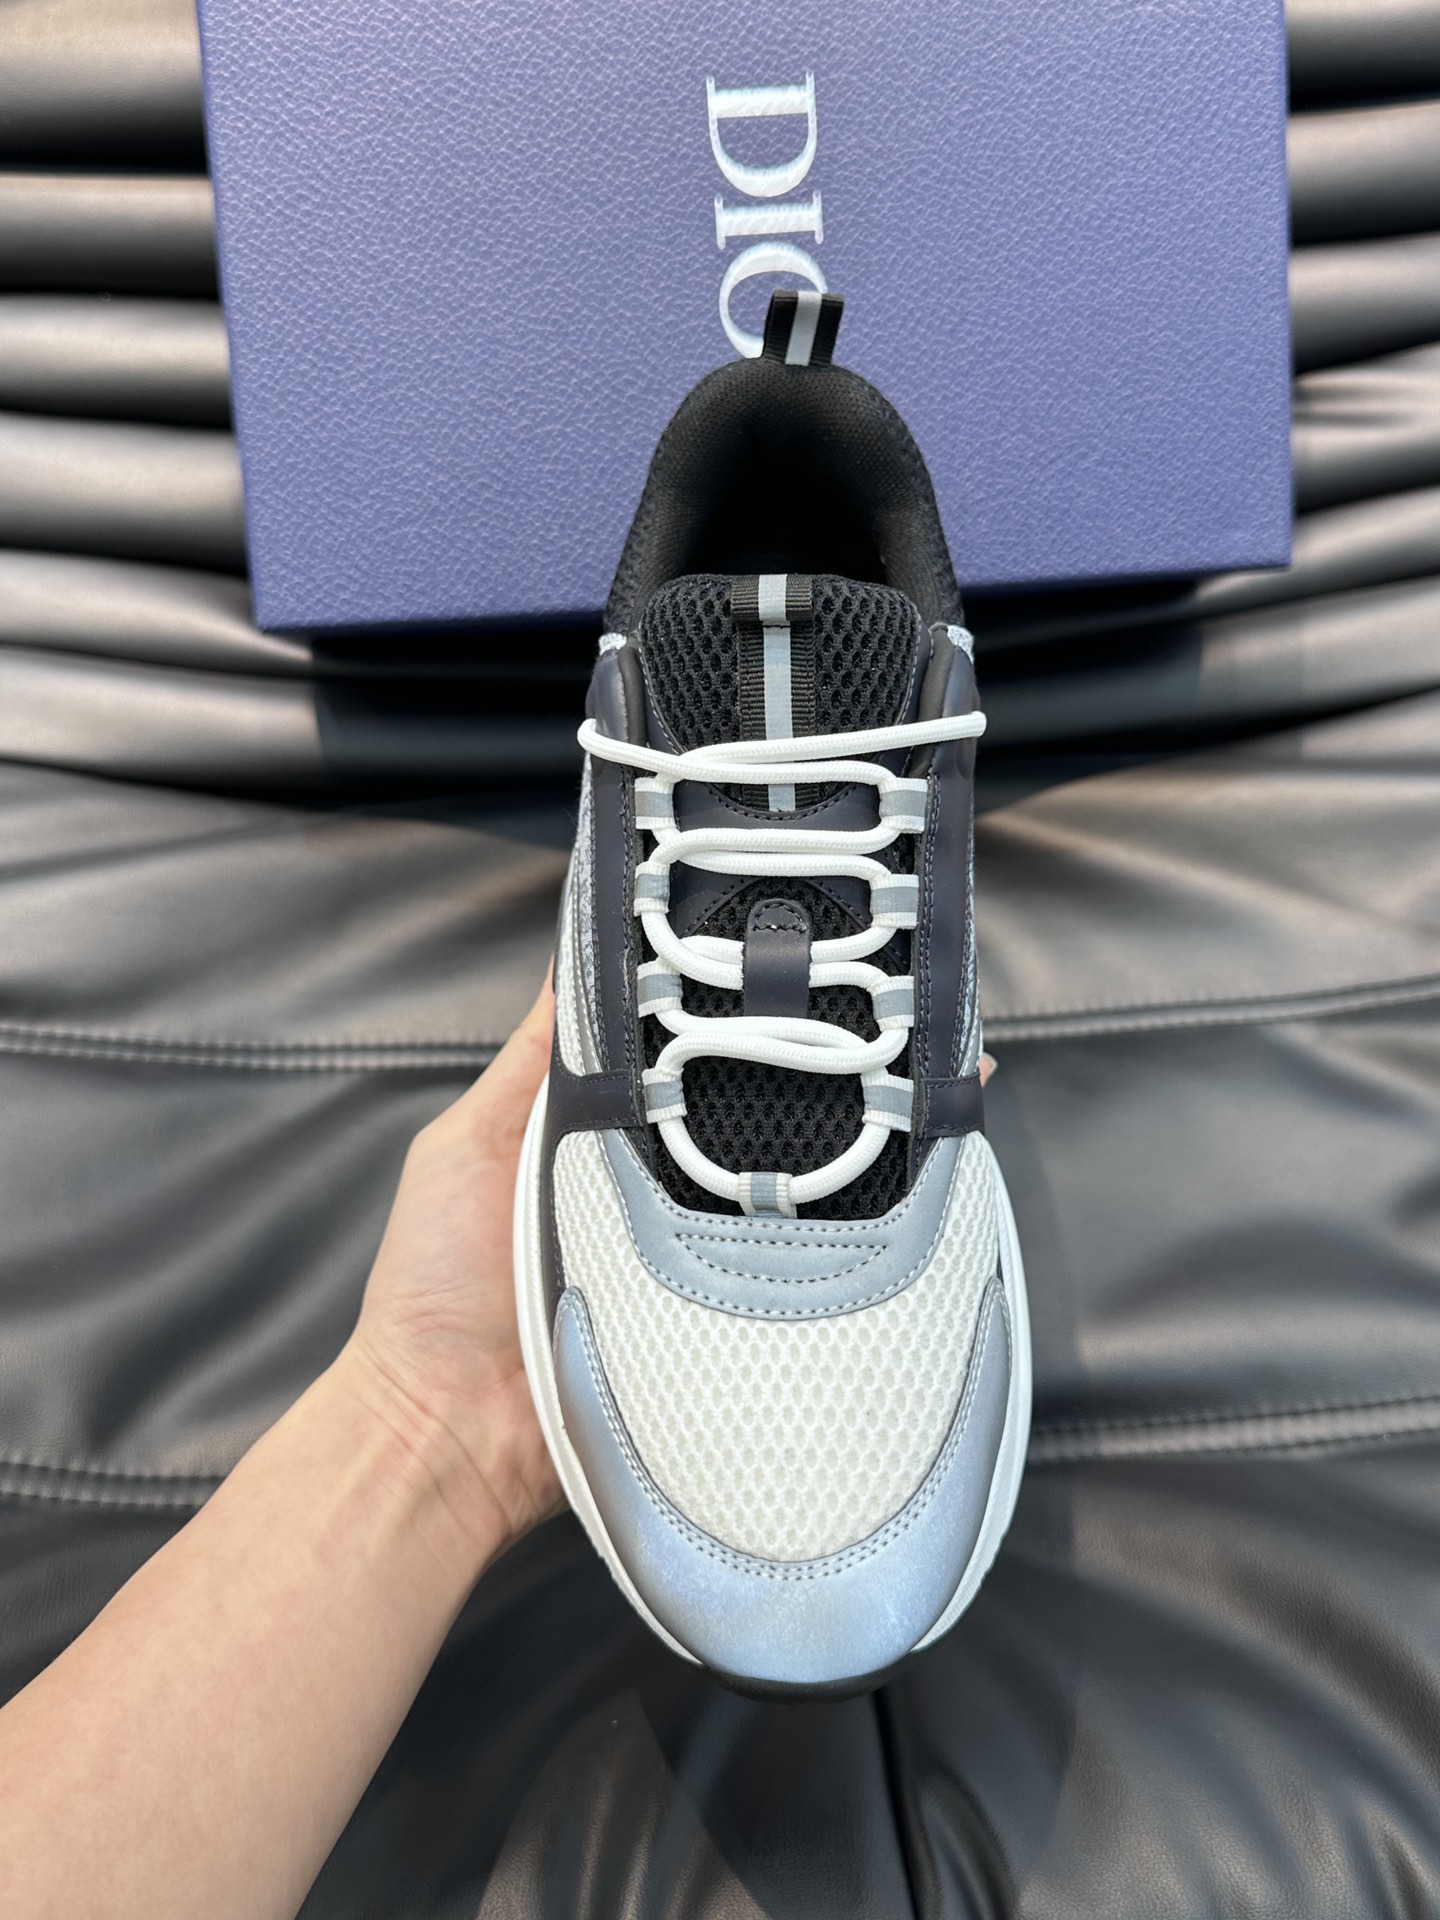 ️️D️x高版本B22男士慢跑时尚运动鞋这款单品从复古慢跑鞋汲取灵感采用厚实的低帮设计以黑色牛皮革以及网